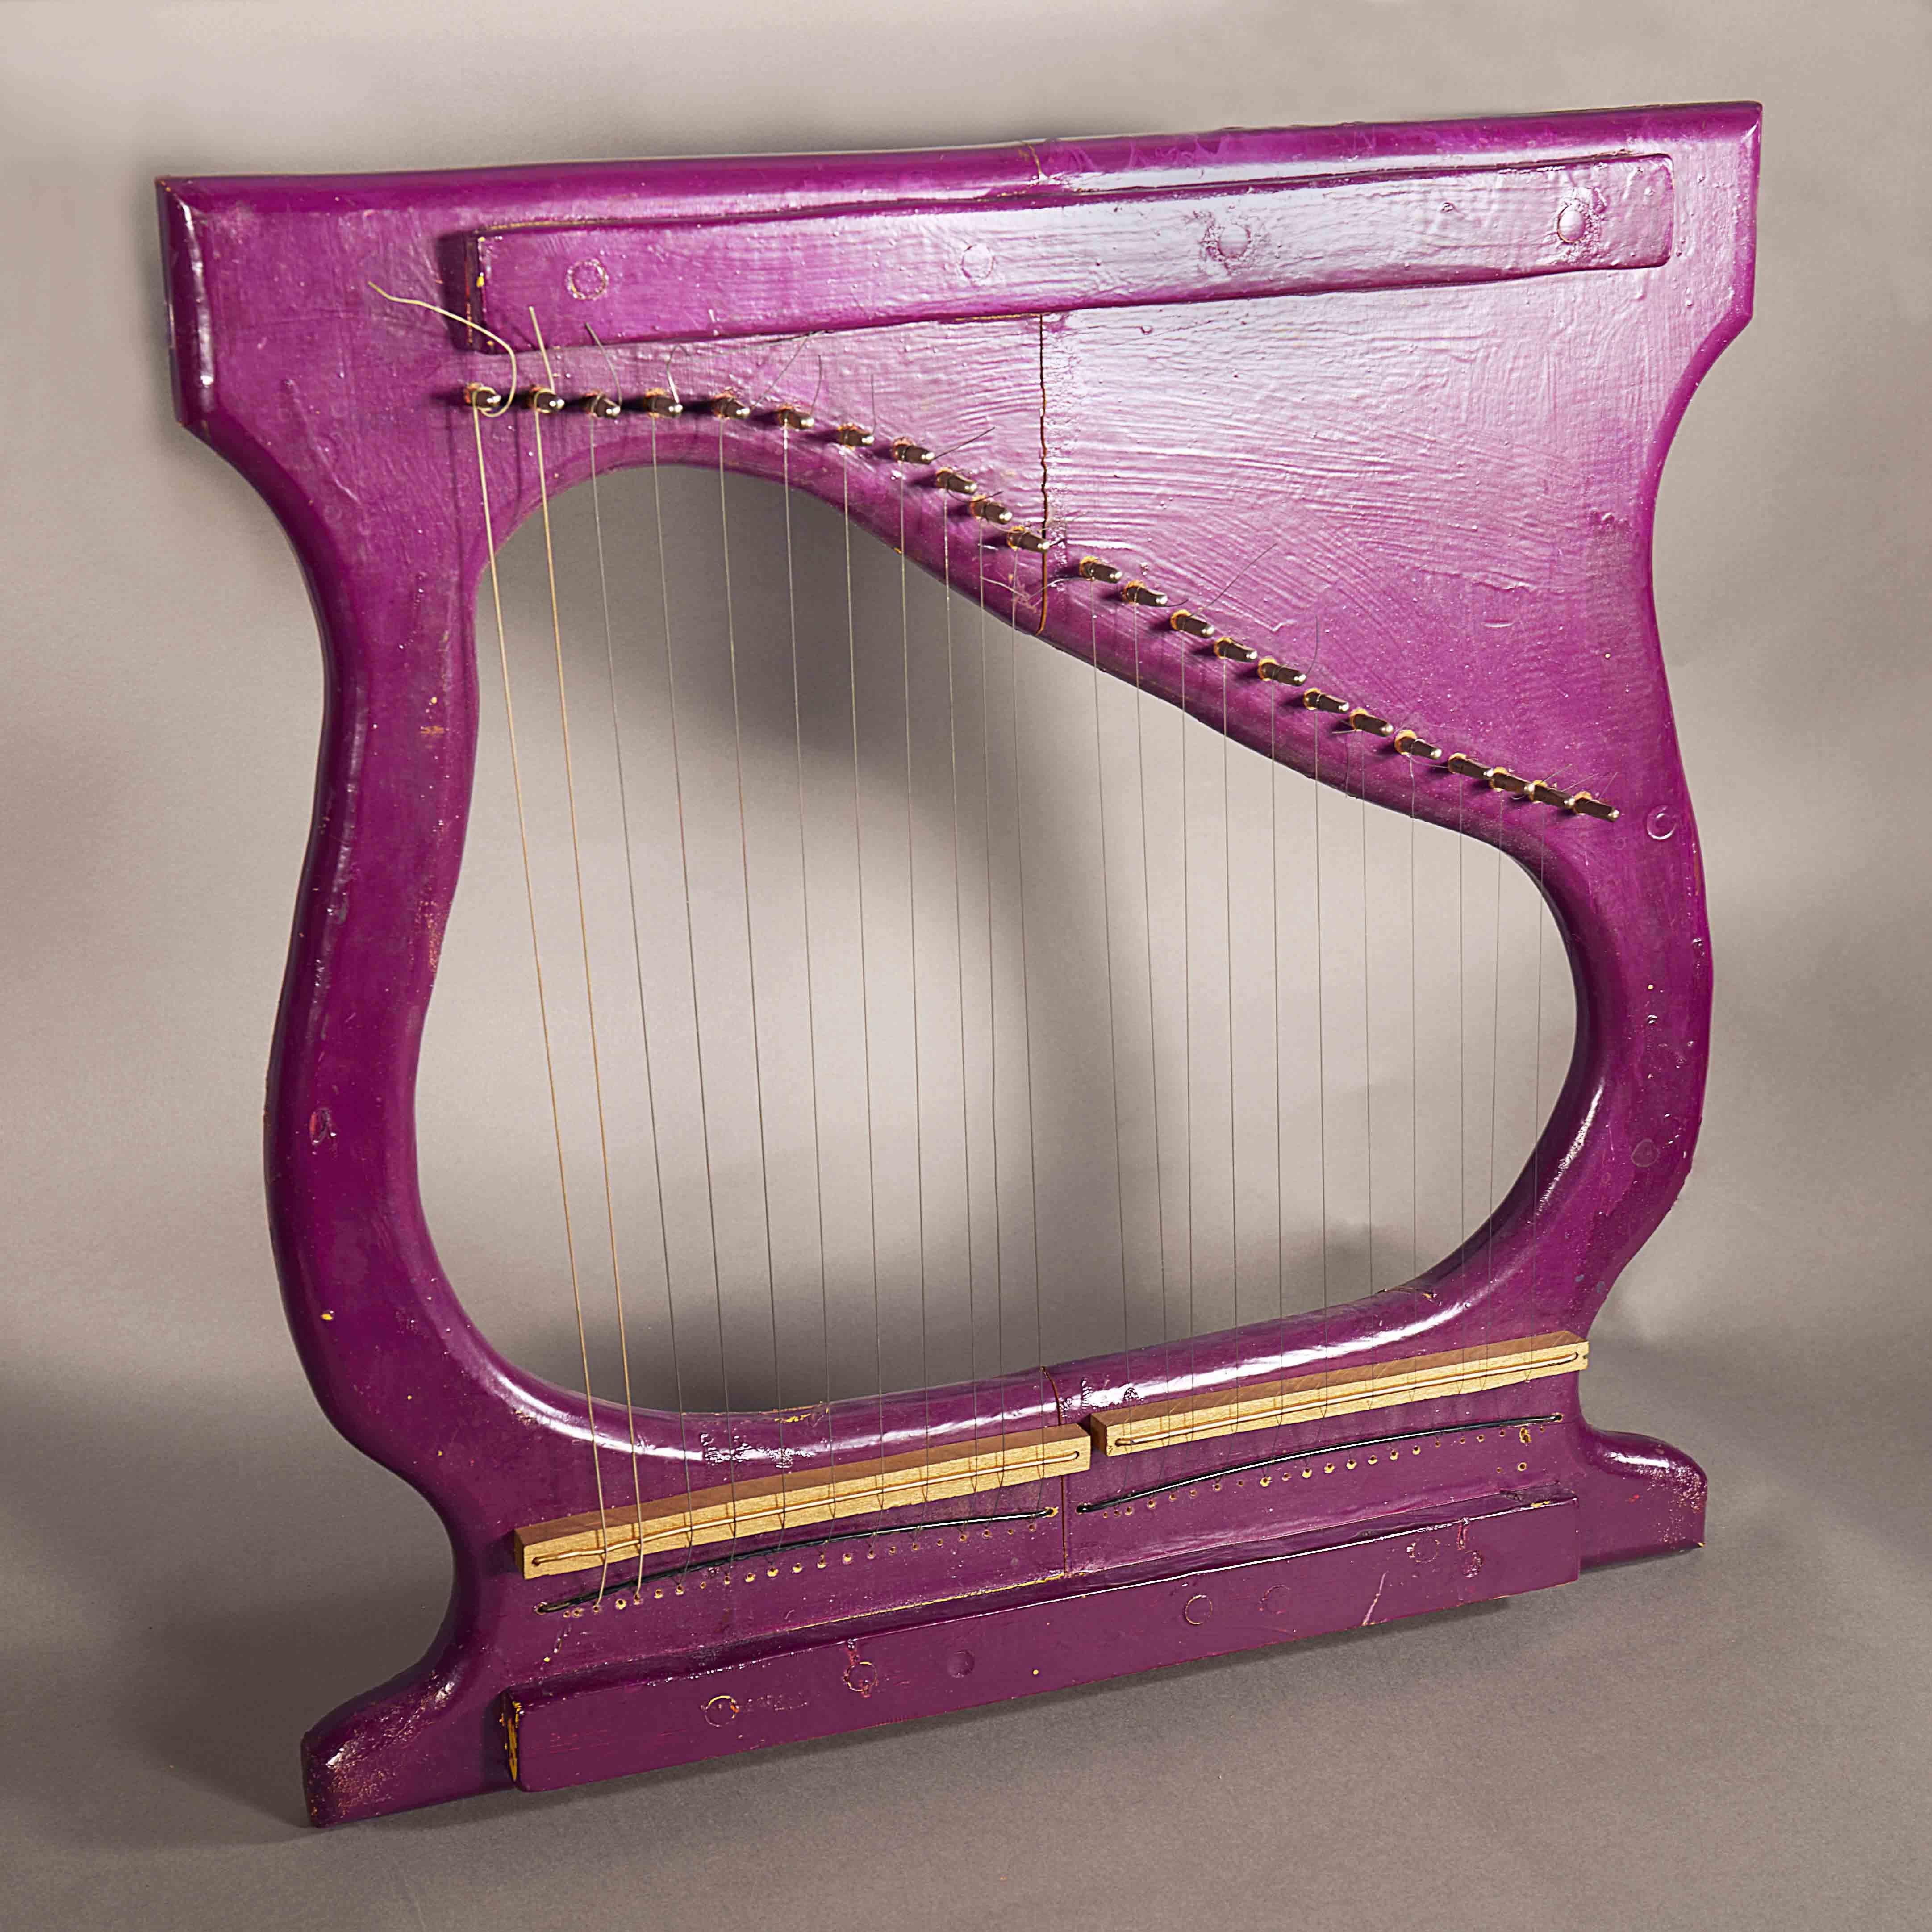 A small magenta harp.